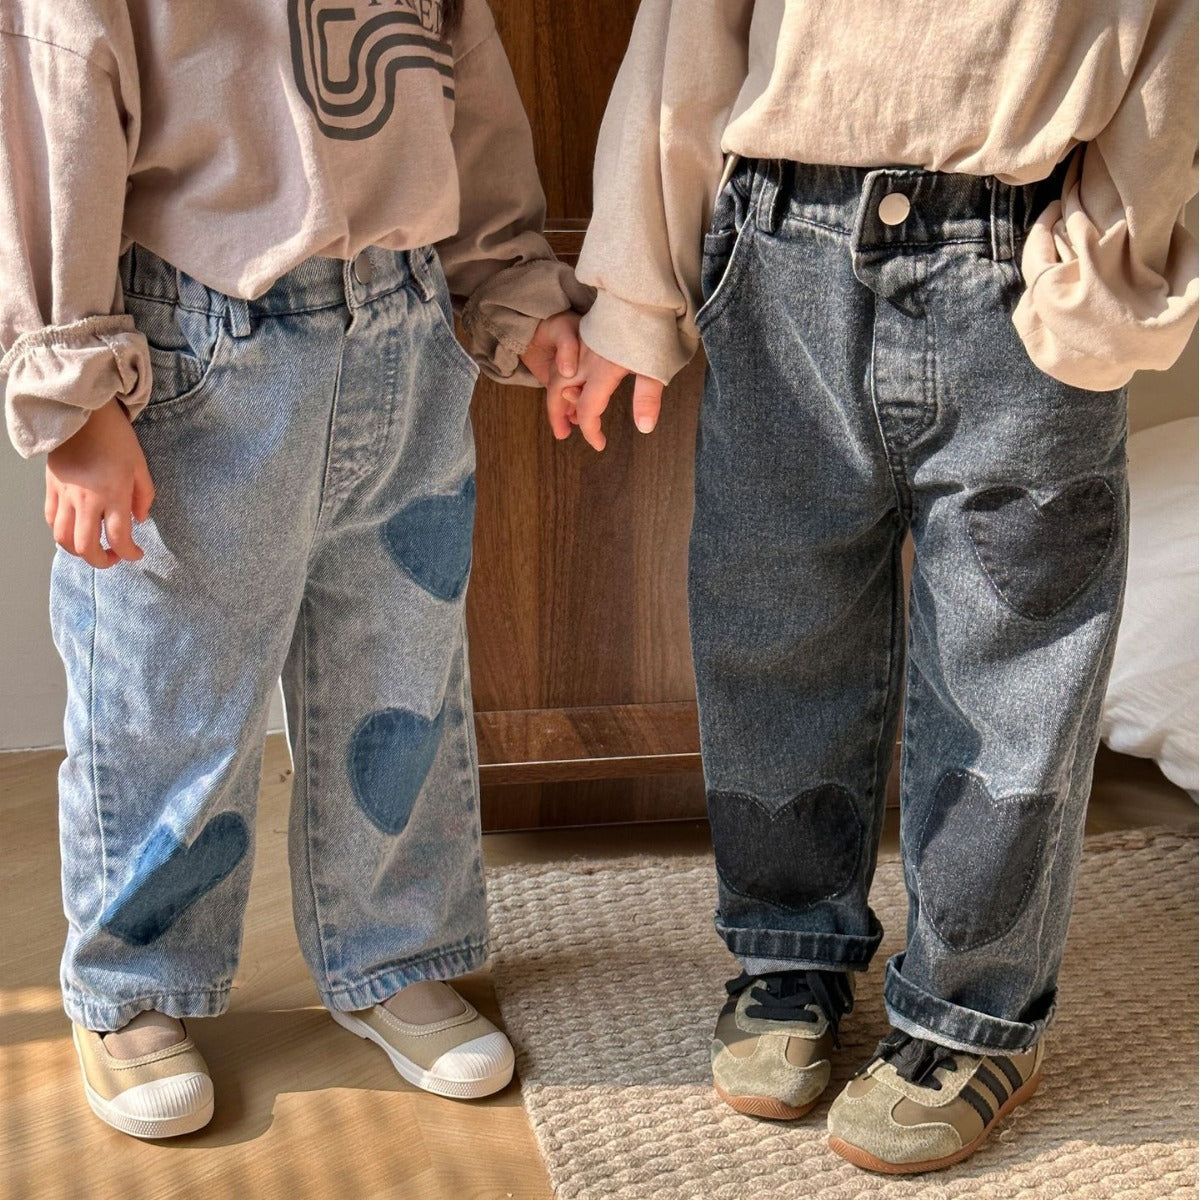 Children love heart jeans